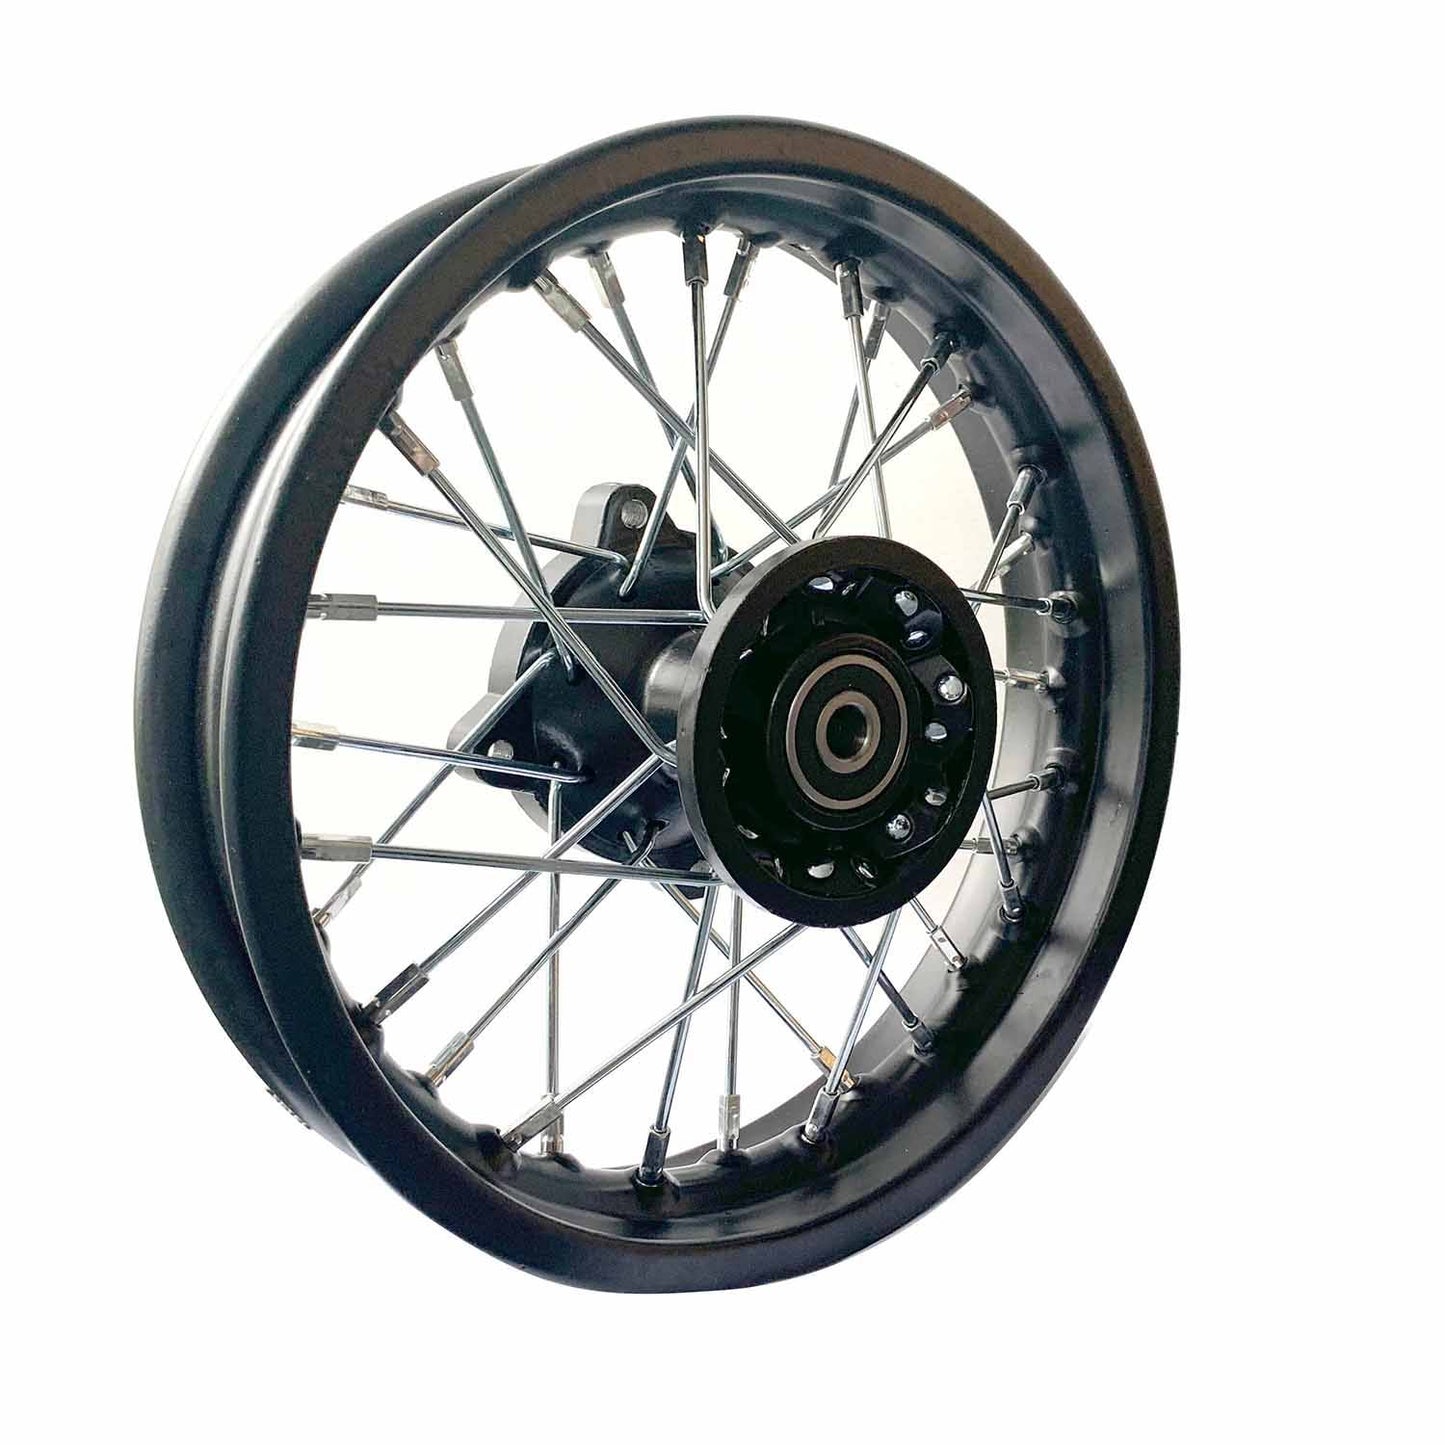 10" Front Dirt Bike Rim 1.60x10 12mm Axle Fit 2.50-10 2.75-10 3.00-10 Tyres - TDRMOTO